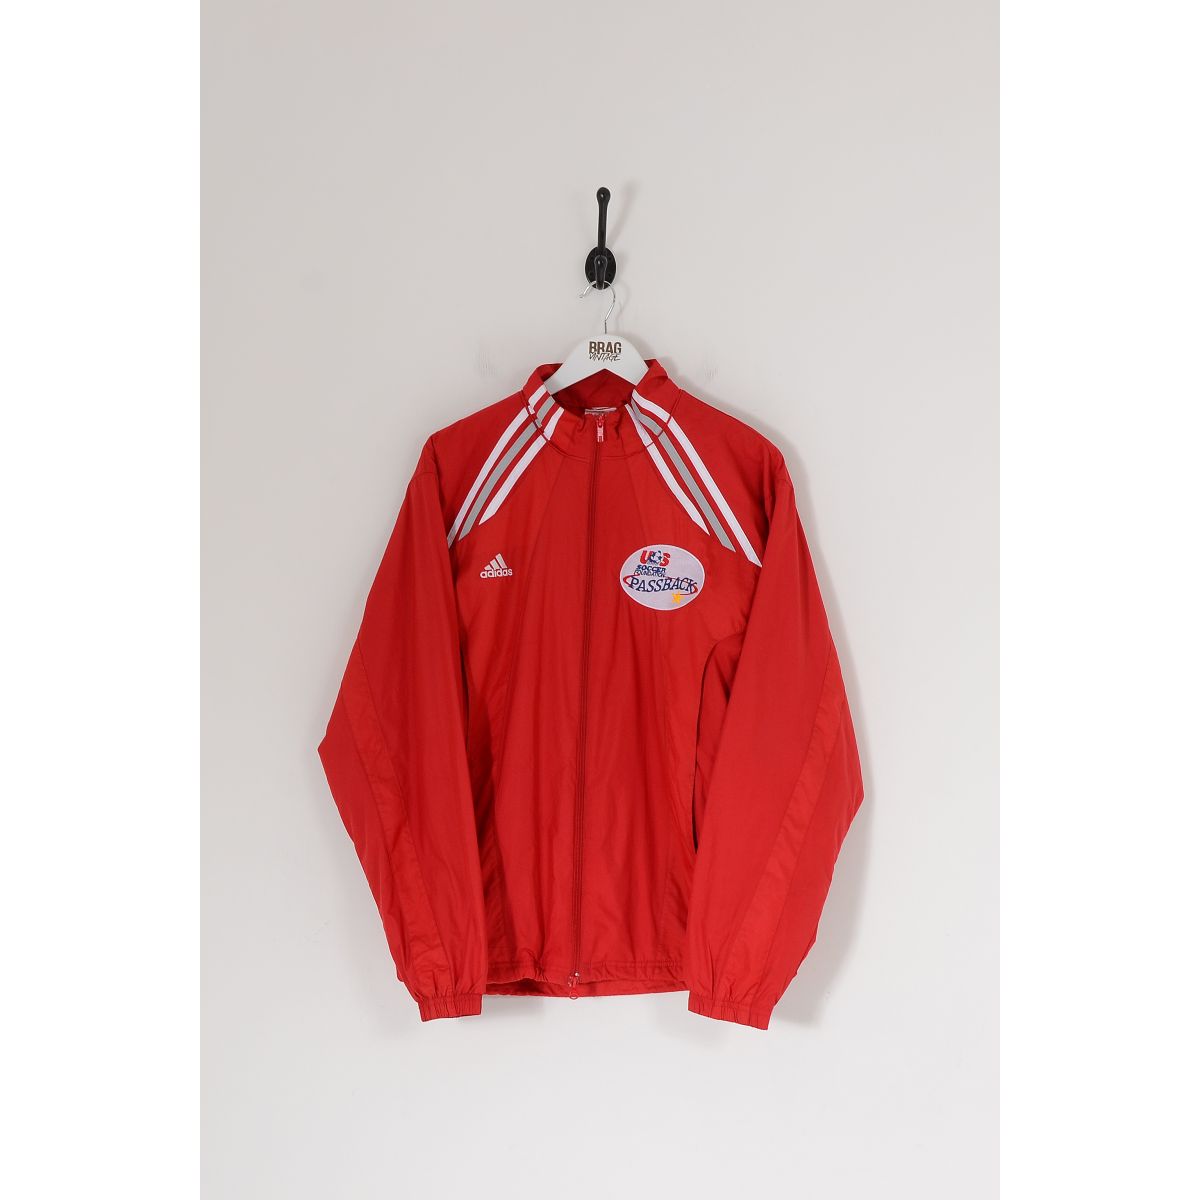 Vintage ADIDAS US Soccer Foundation's Passback Track Top Jacket Red Medium